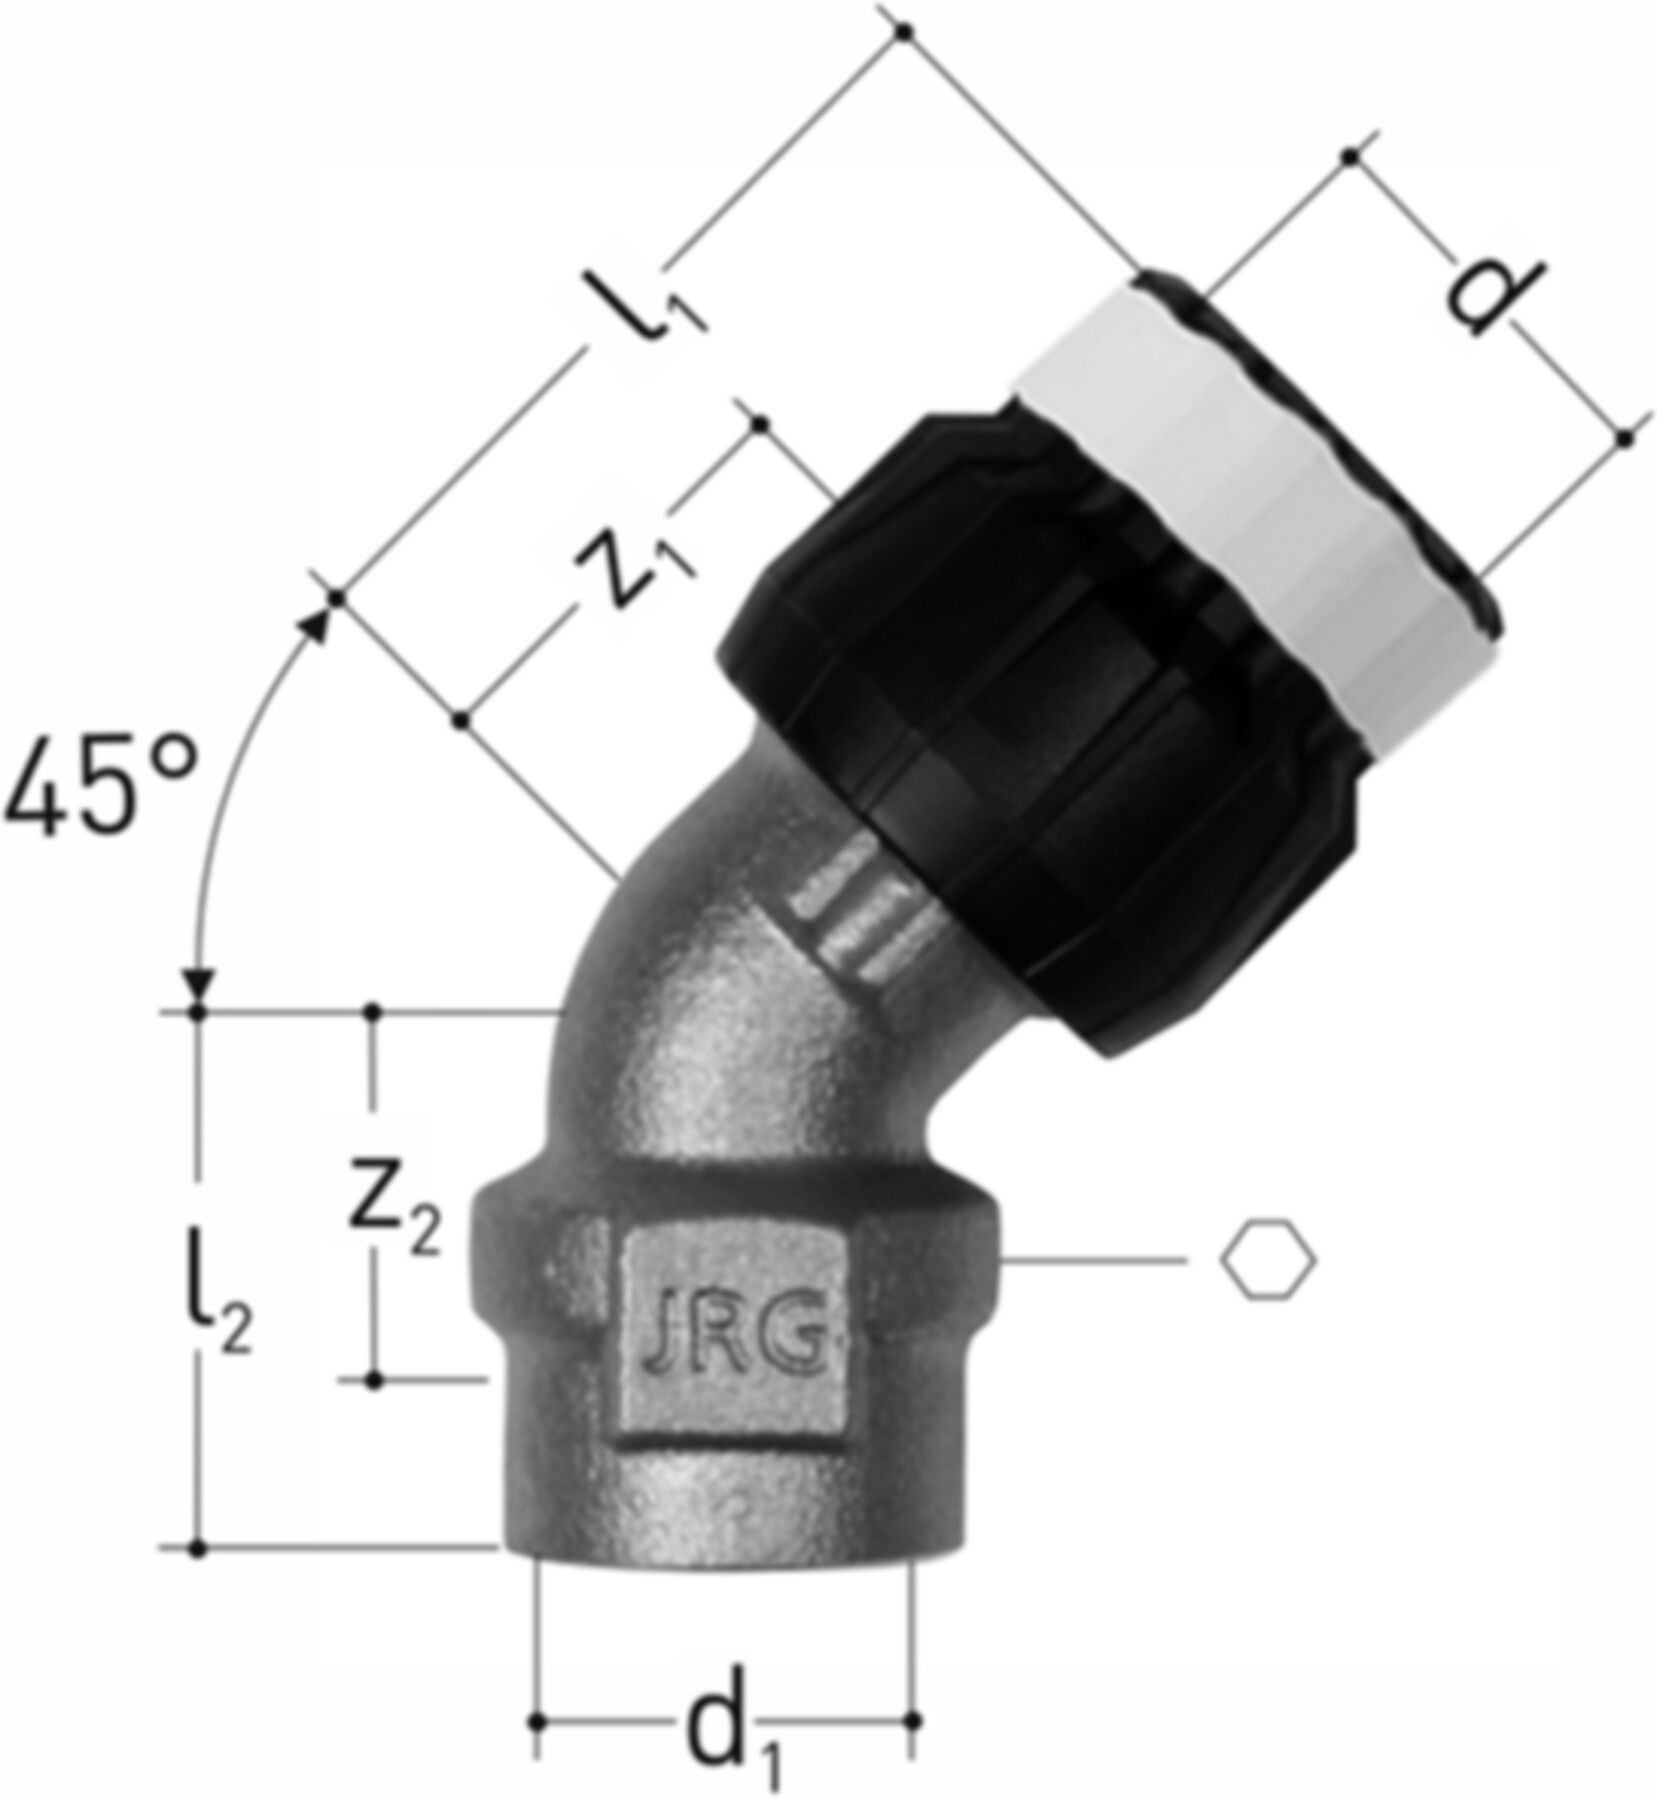 Winkel 45° mit IG 1"-32 4677.310 - JRG Sanipex-MT-Formstücke/Rohre in Stg.